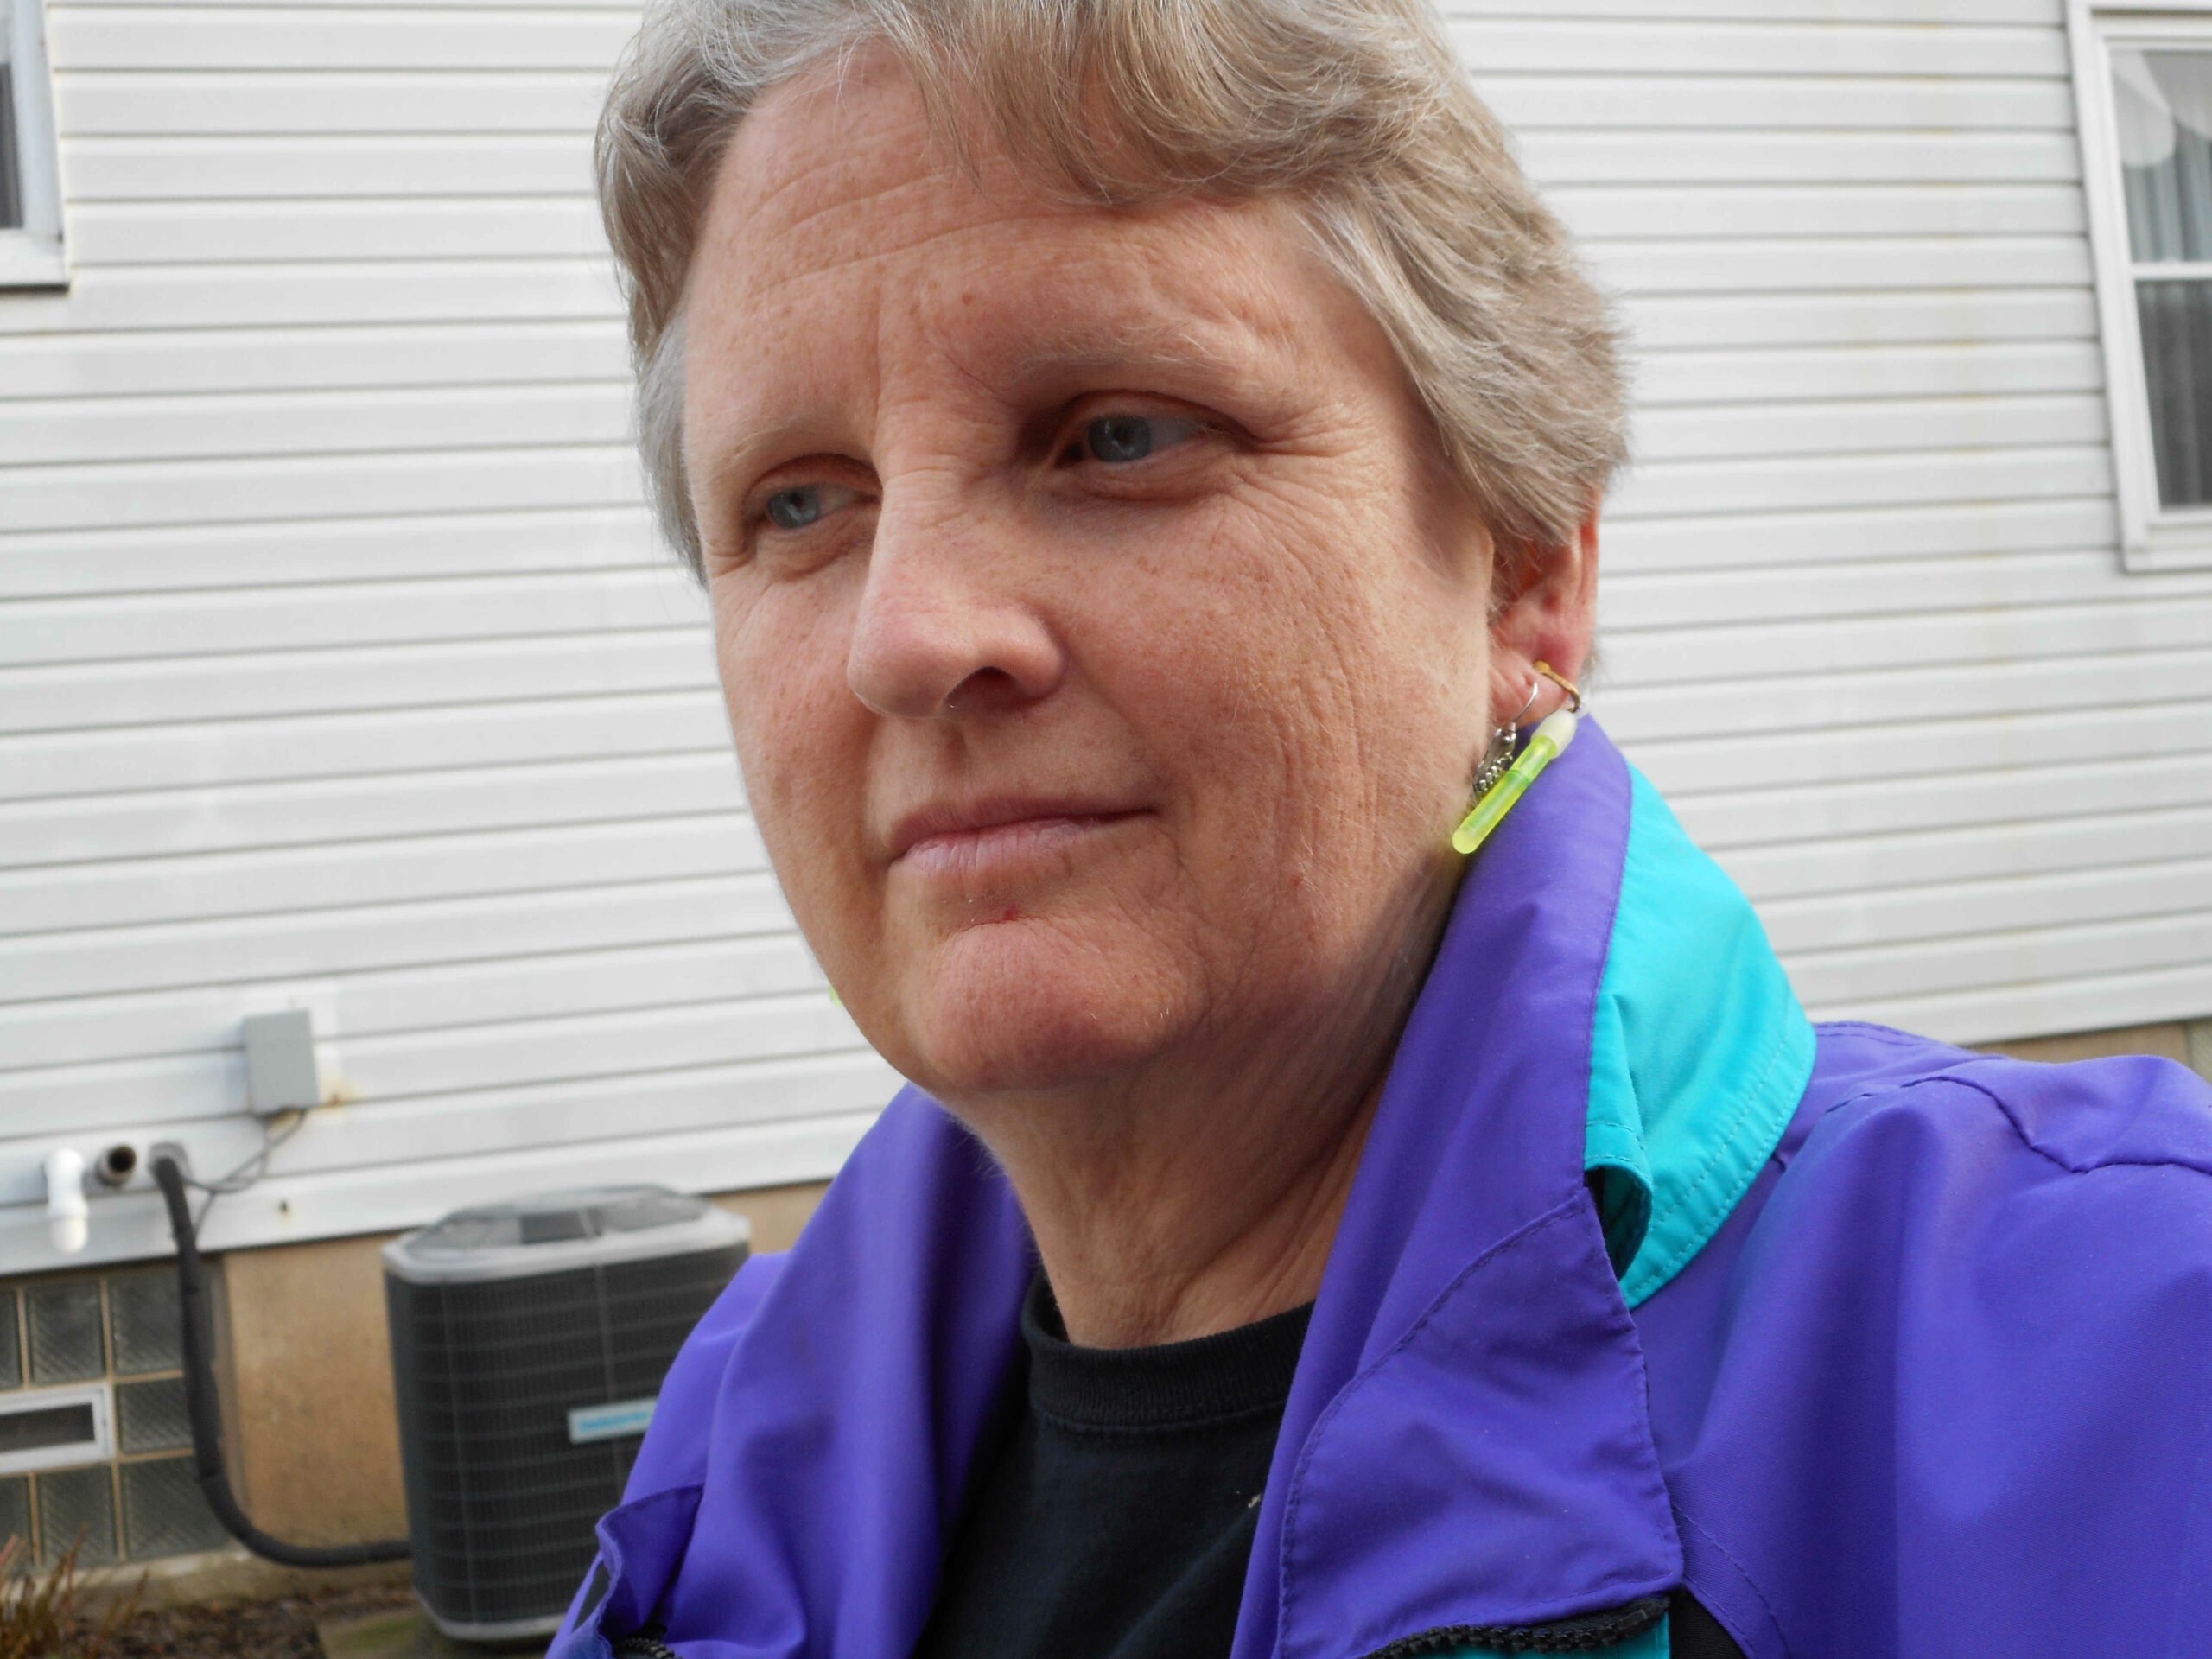 A headshot of Susan Smith wearing a purple winter coat